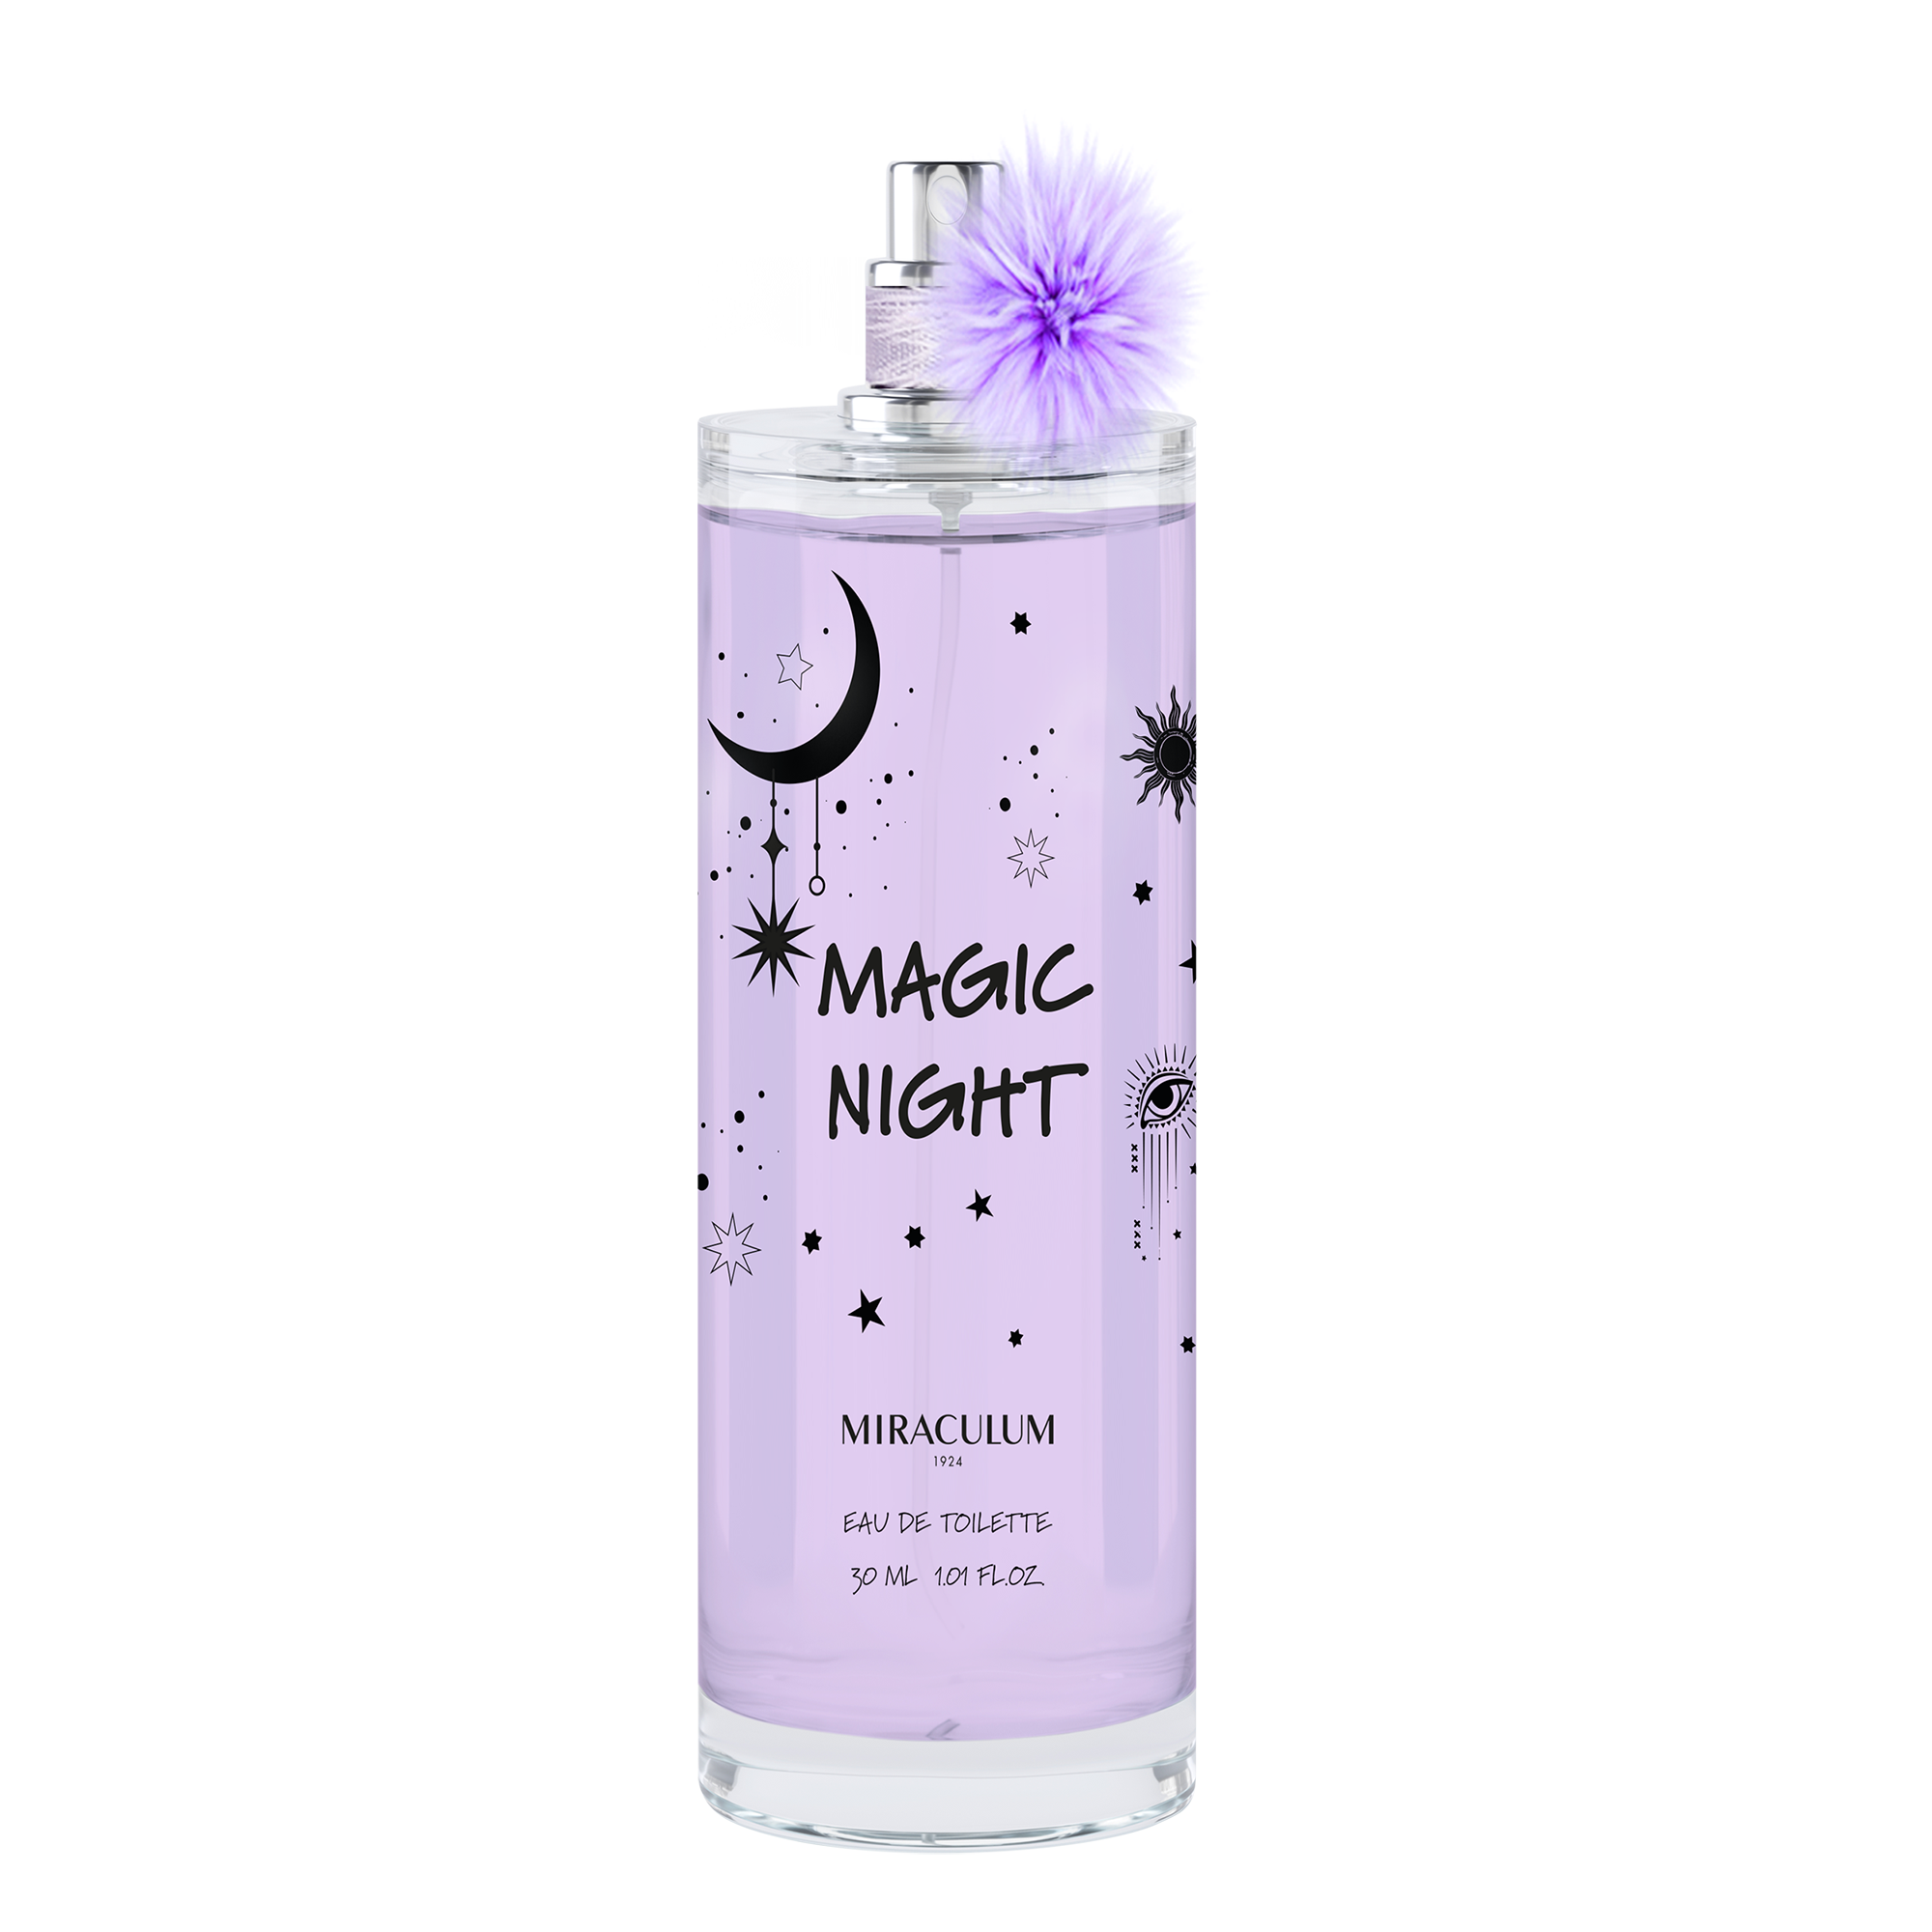 Женская туалетная вода Miraculum Magic Night, 30 мл 70 80 pcs 110 pcs joseph b magic package collection collection magic tricks